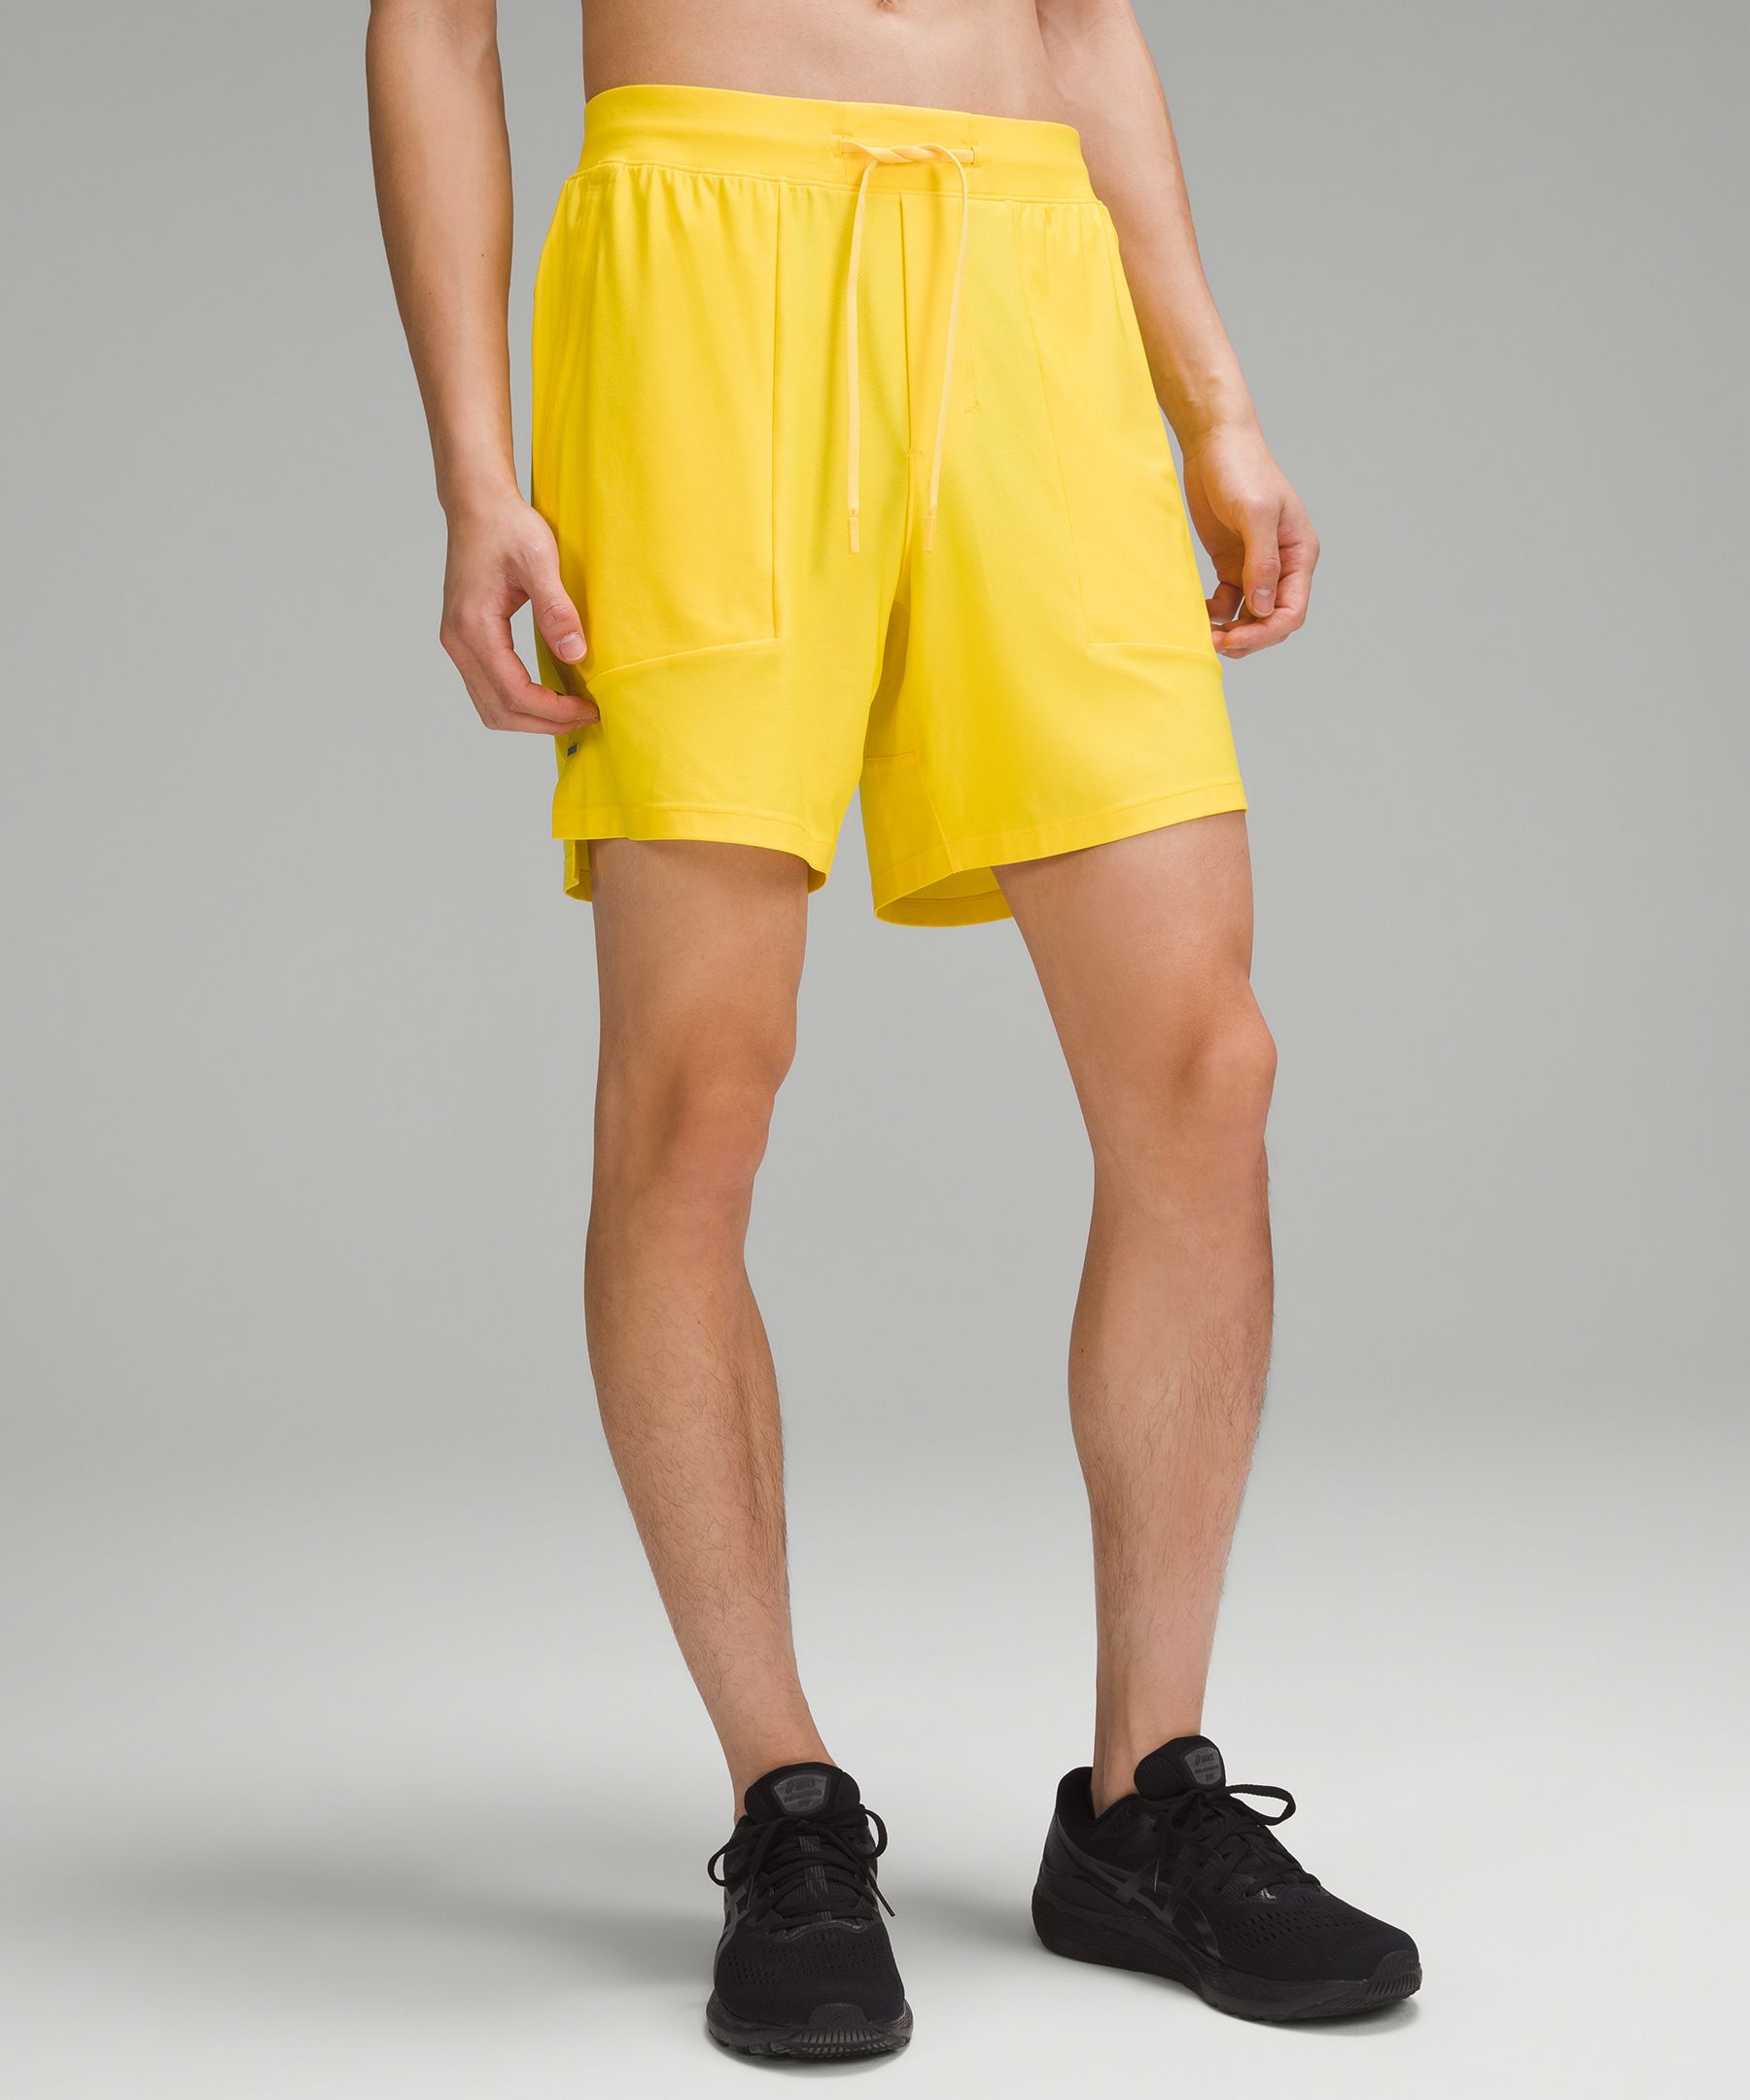 TomTiger 3” shorts in 2023  Blue nike shorts, Lulu lemon shorts, Wear green